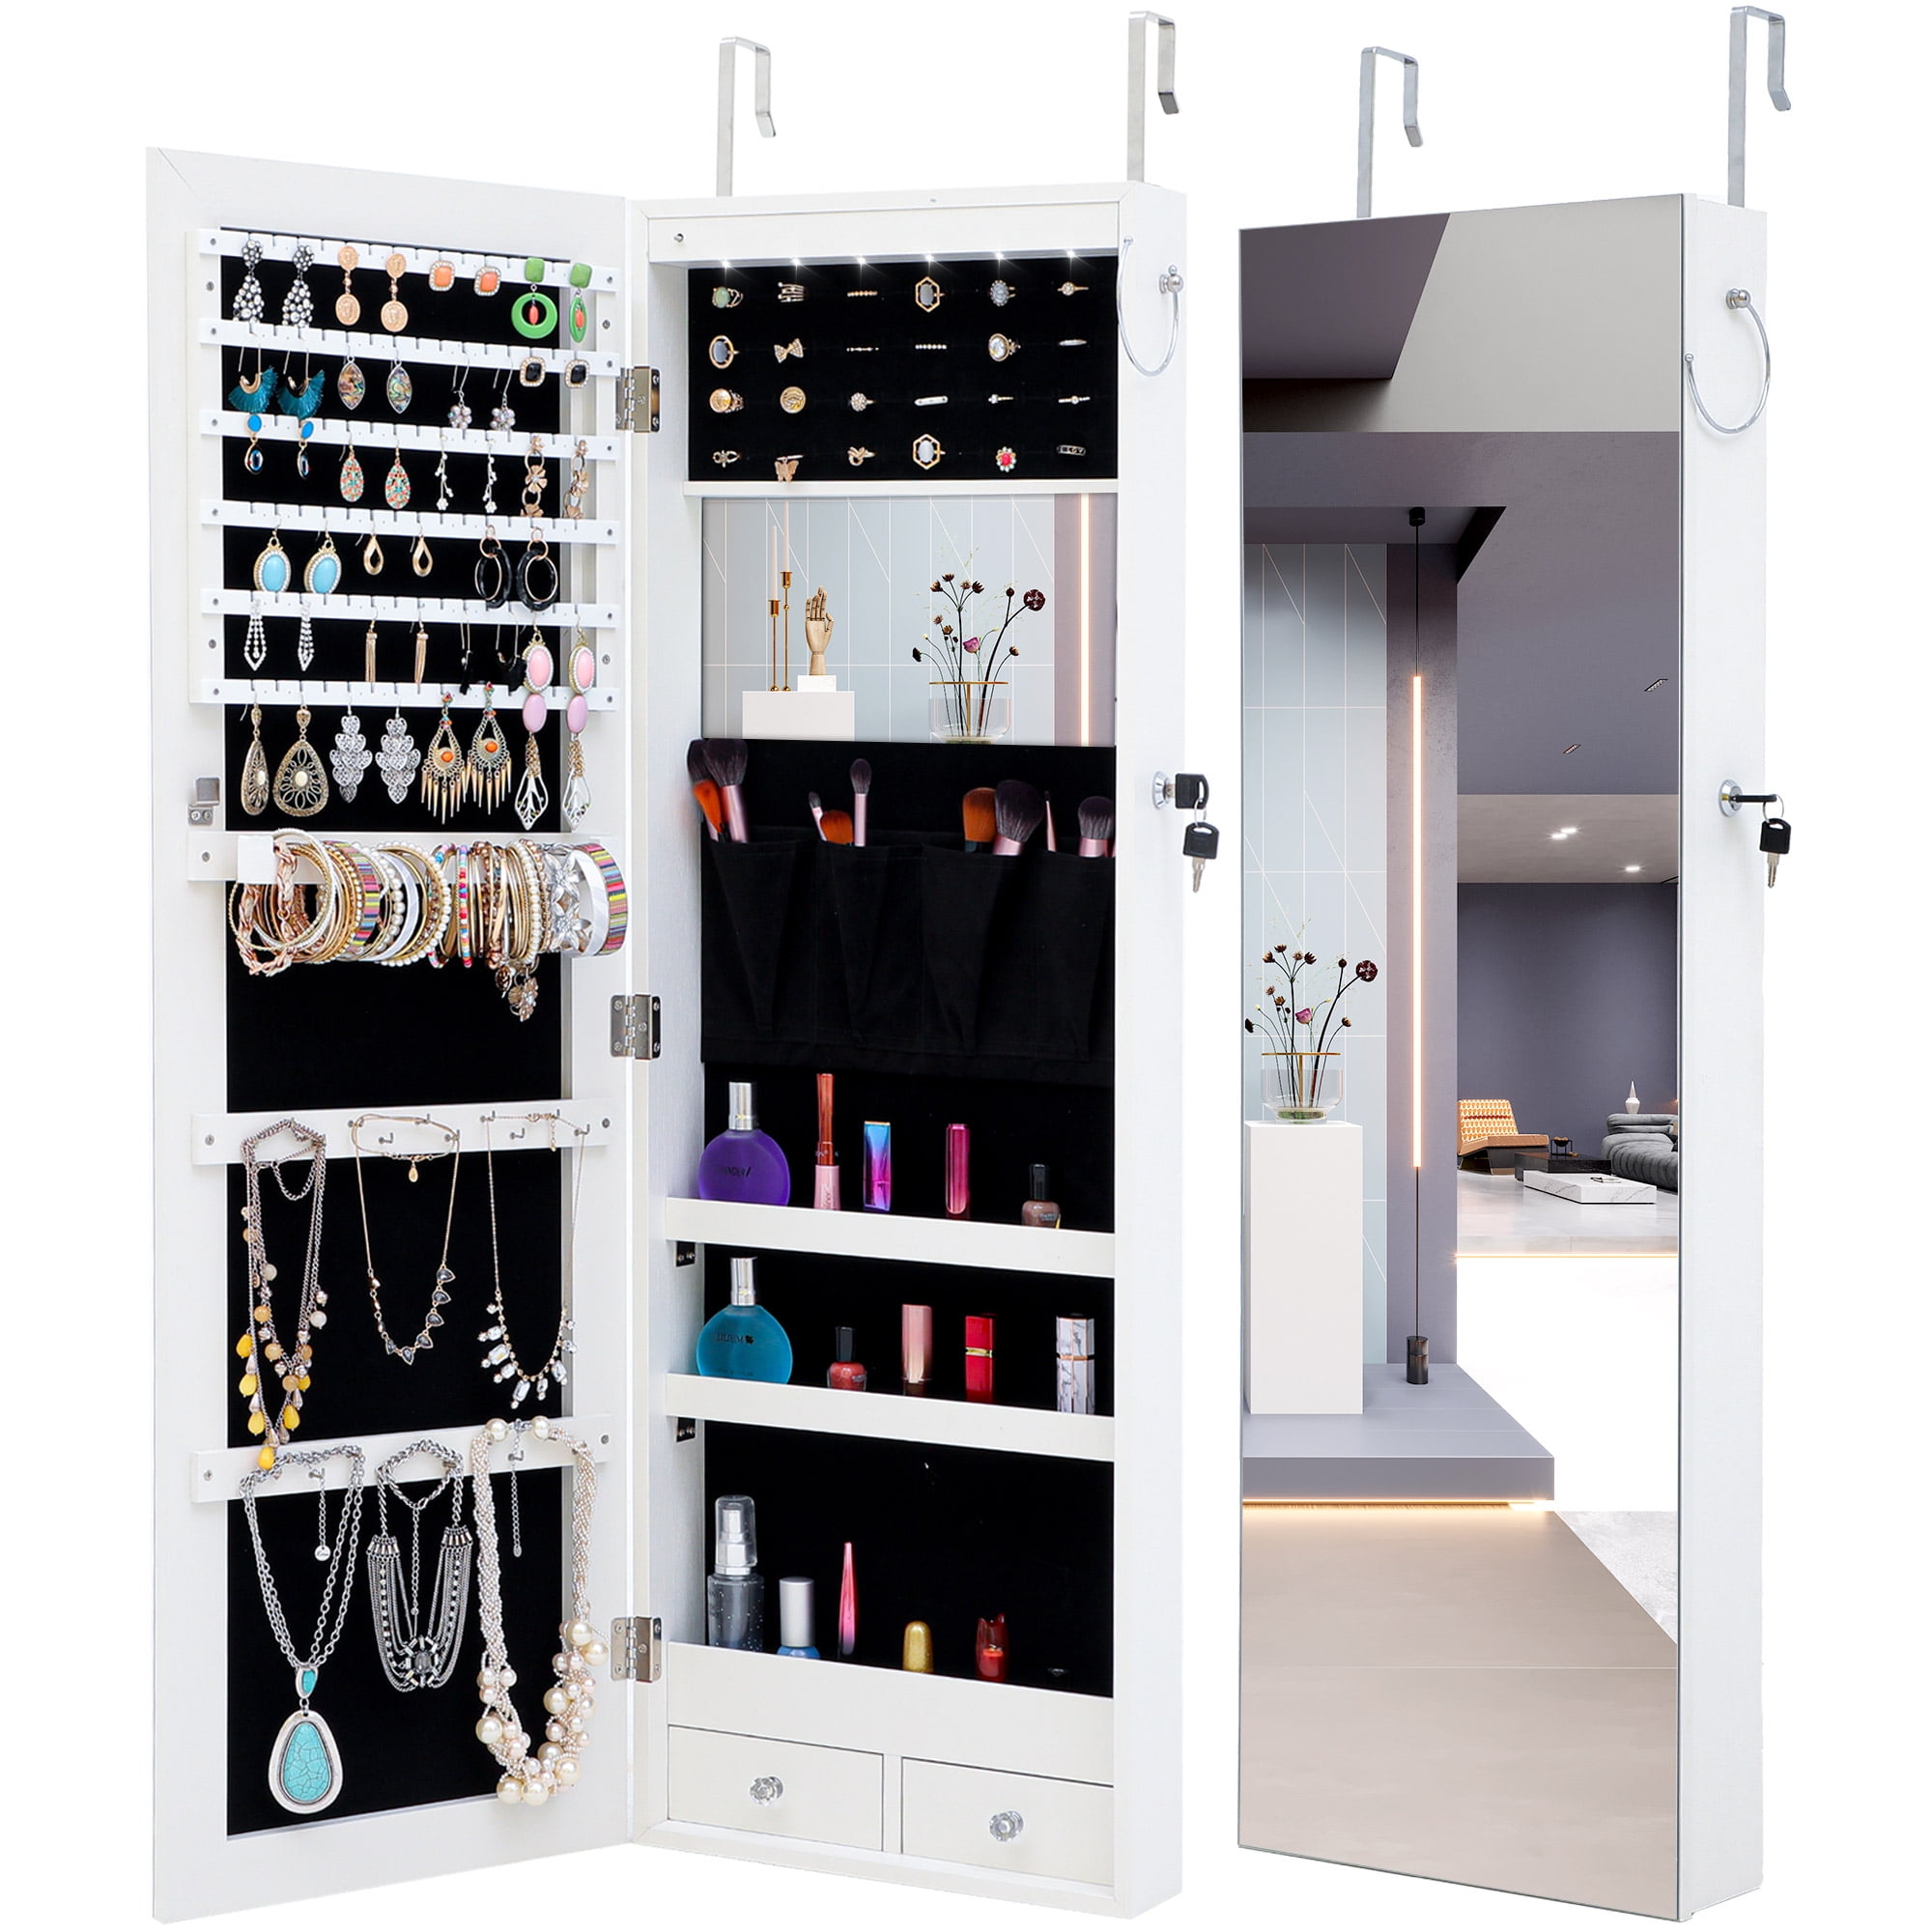 LUXFURNI Mirror Jewelry Cabinet 6 LED Lights Wall-Mount/Door-Hanging Armoire Full Screen Mirror Large Storage Organizer Lockable